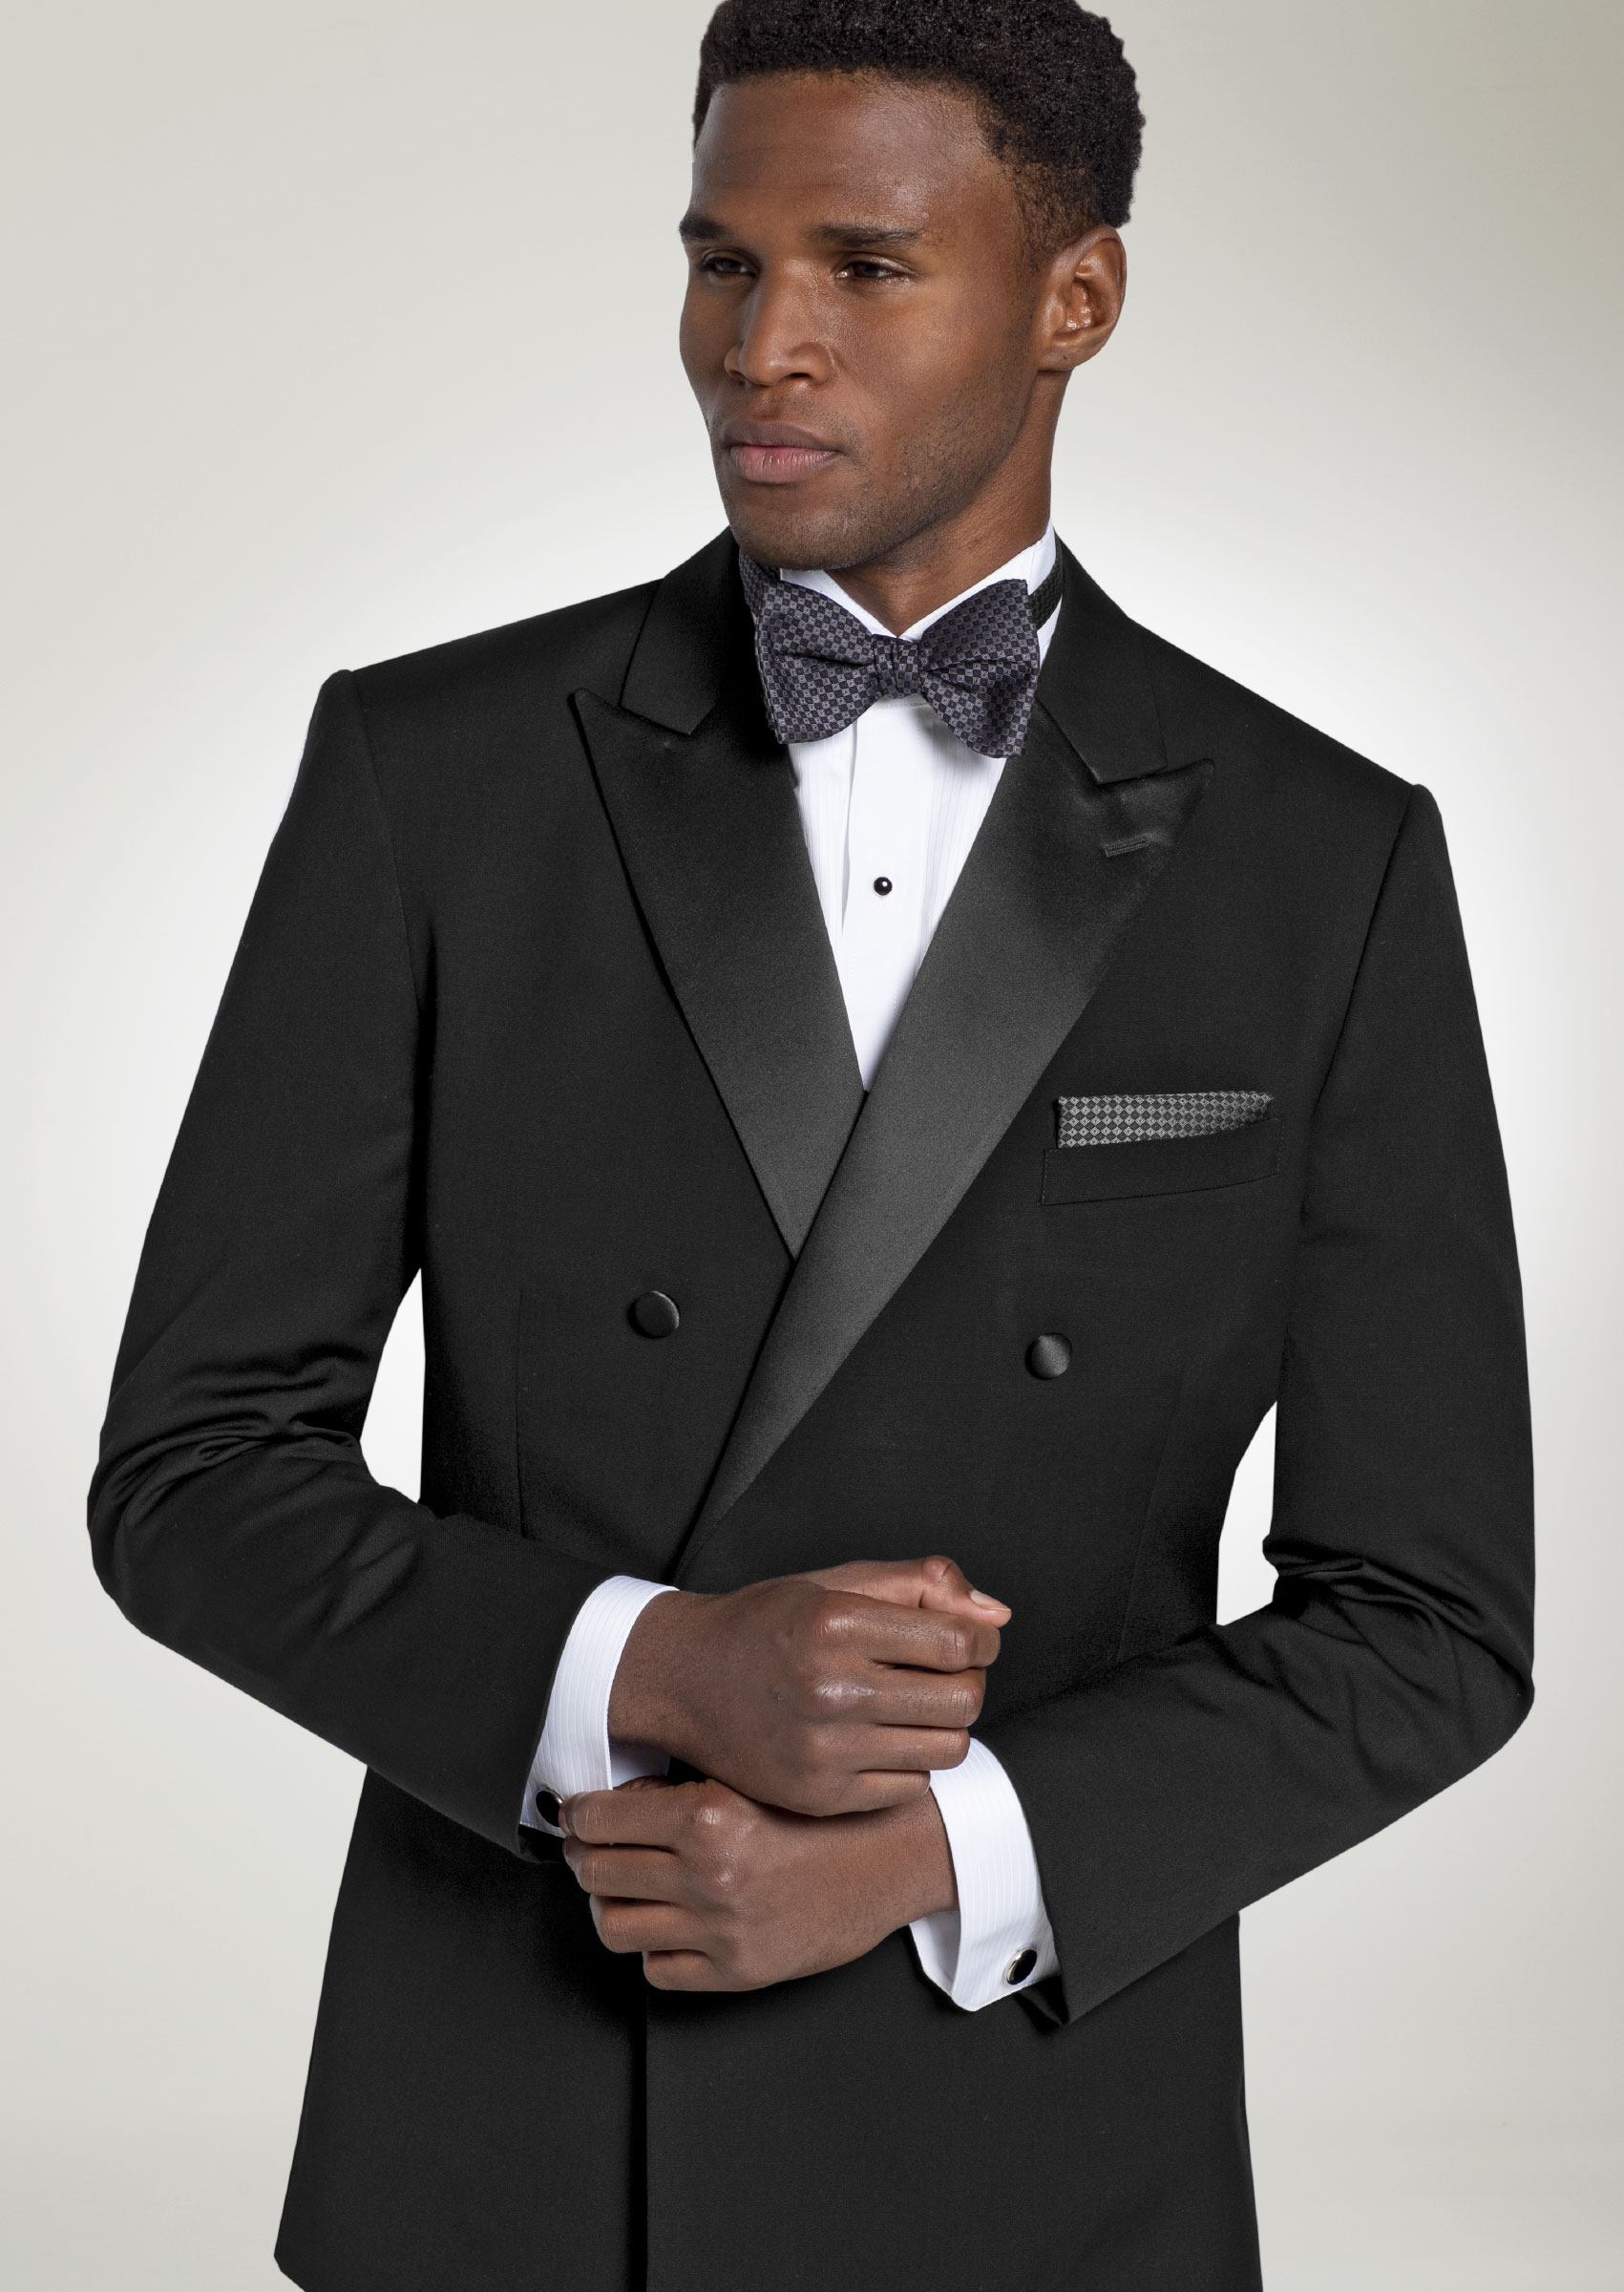 Sagets Formal Wear - Tuxedo Rentals, Custom Made Tuxedos